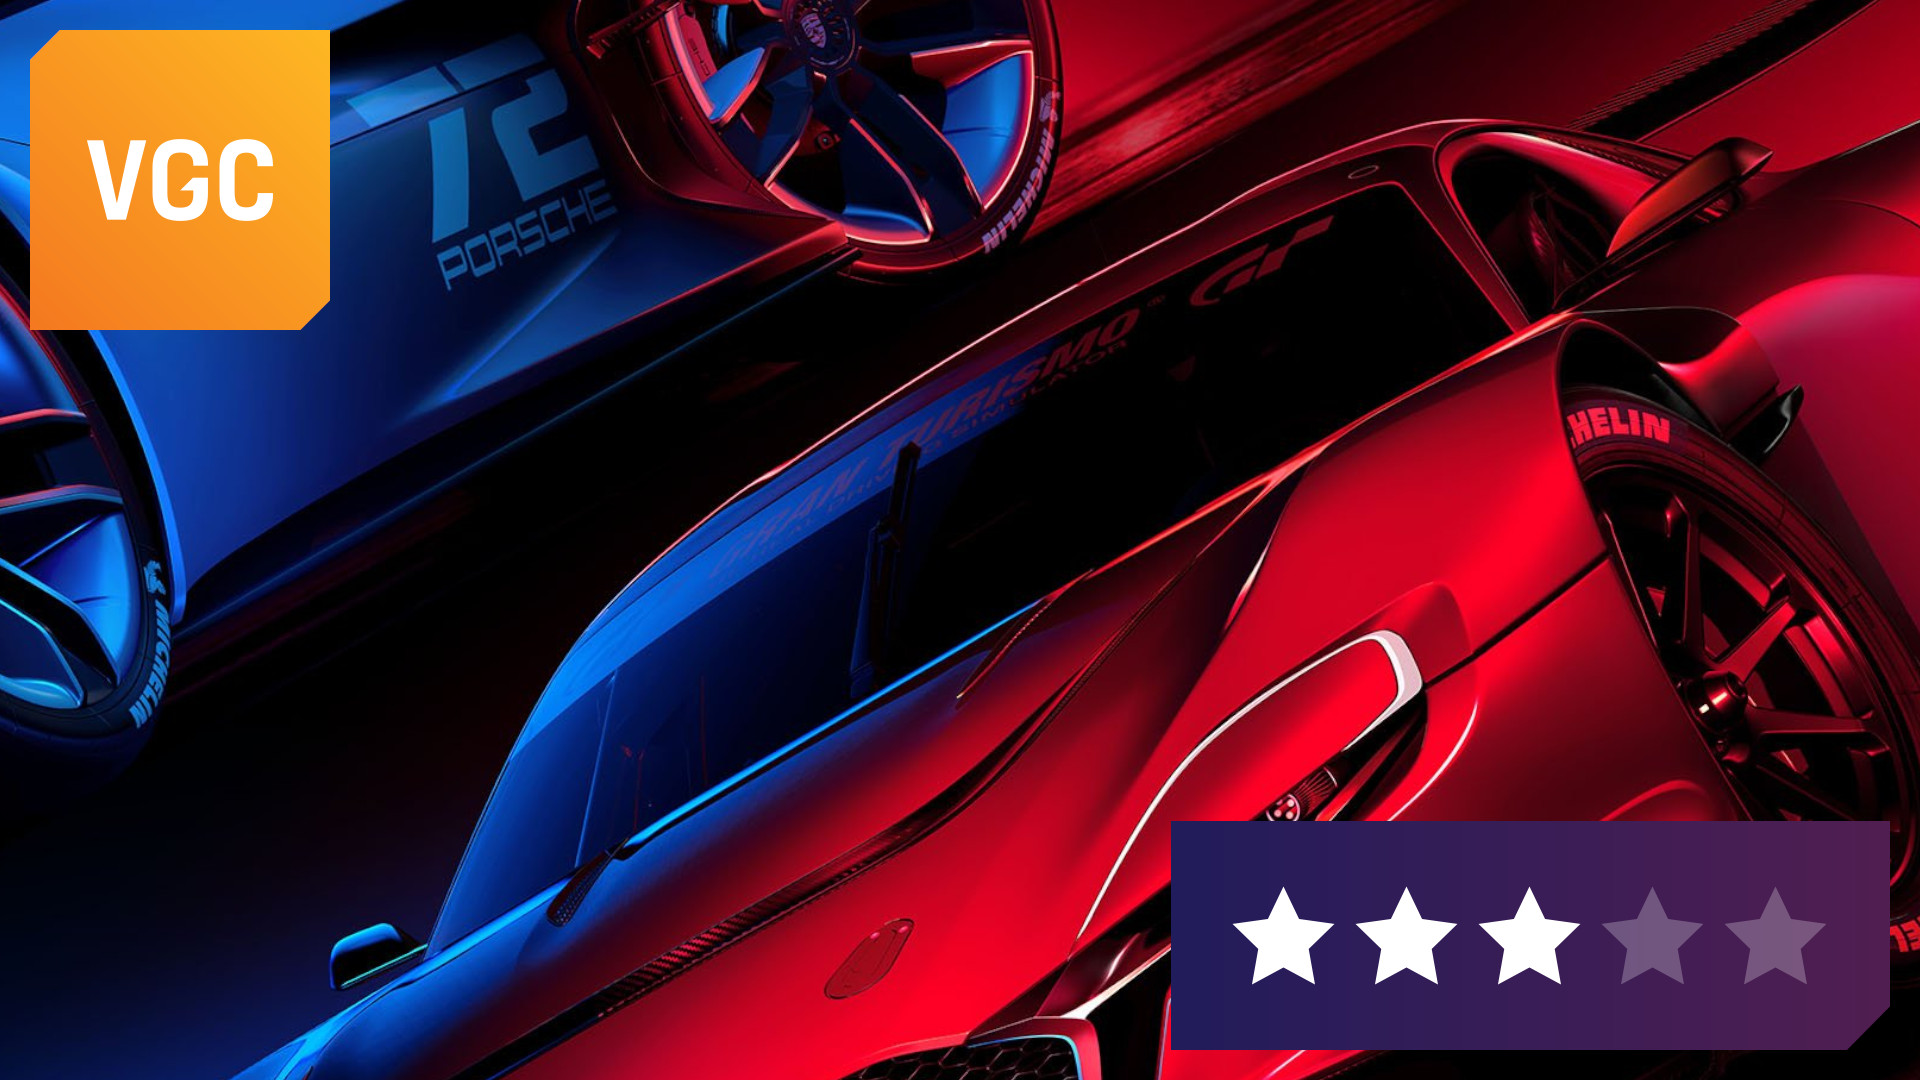 Gran Turismo 7 (PS5) Review: Like a Speeding Bullitt